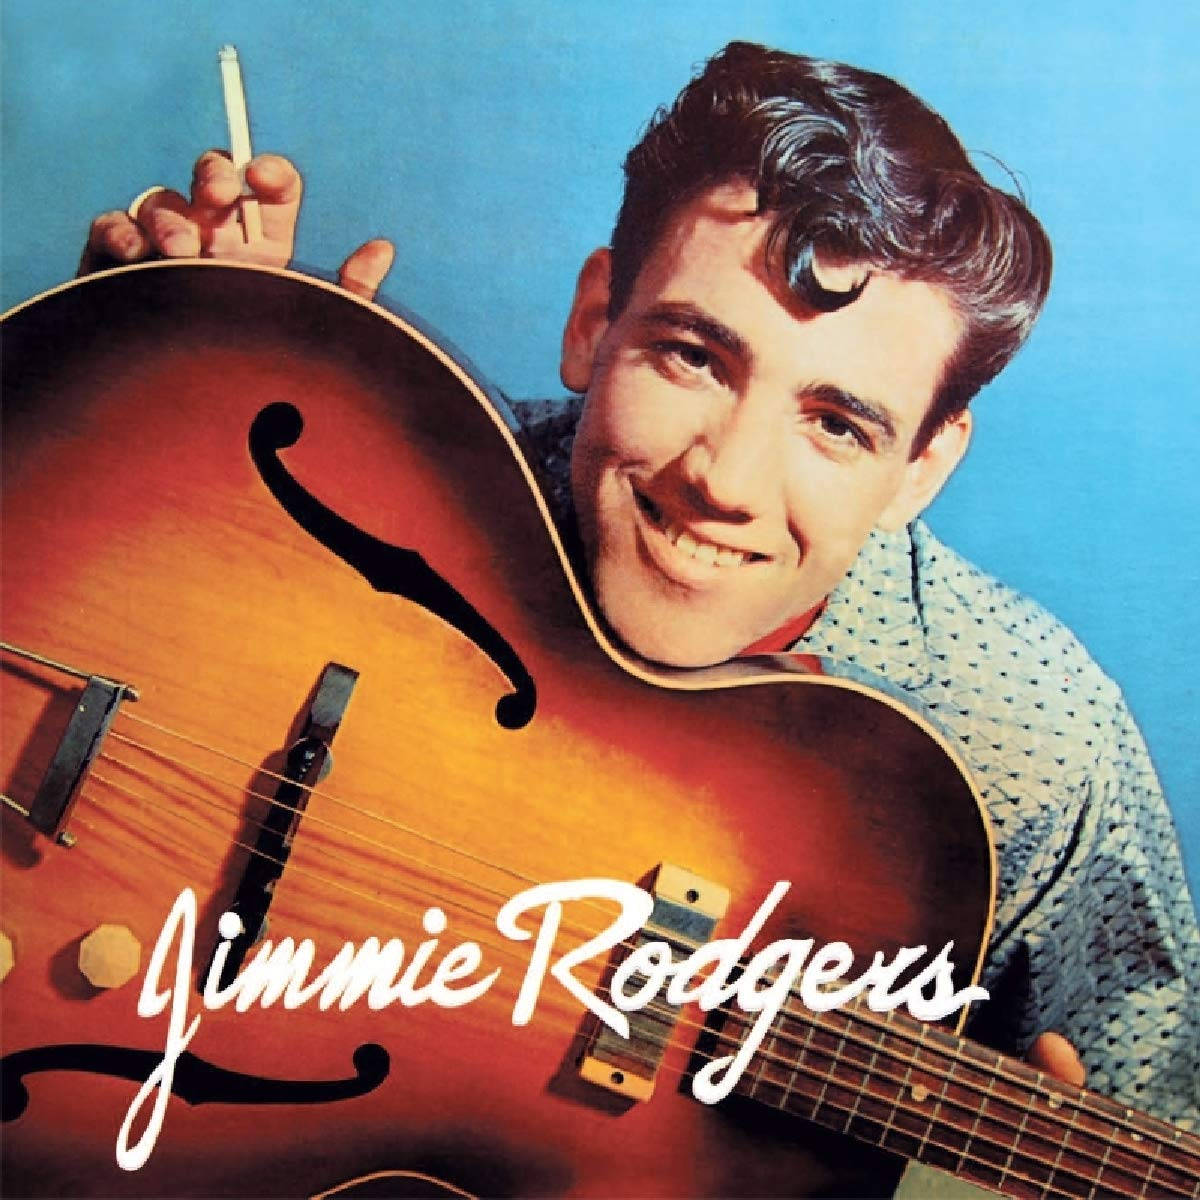 Jimmie Rodgers Modeling An Orange Guitar Wallpaper